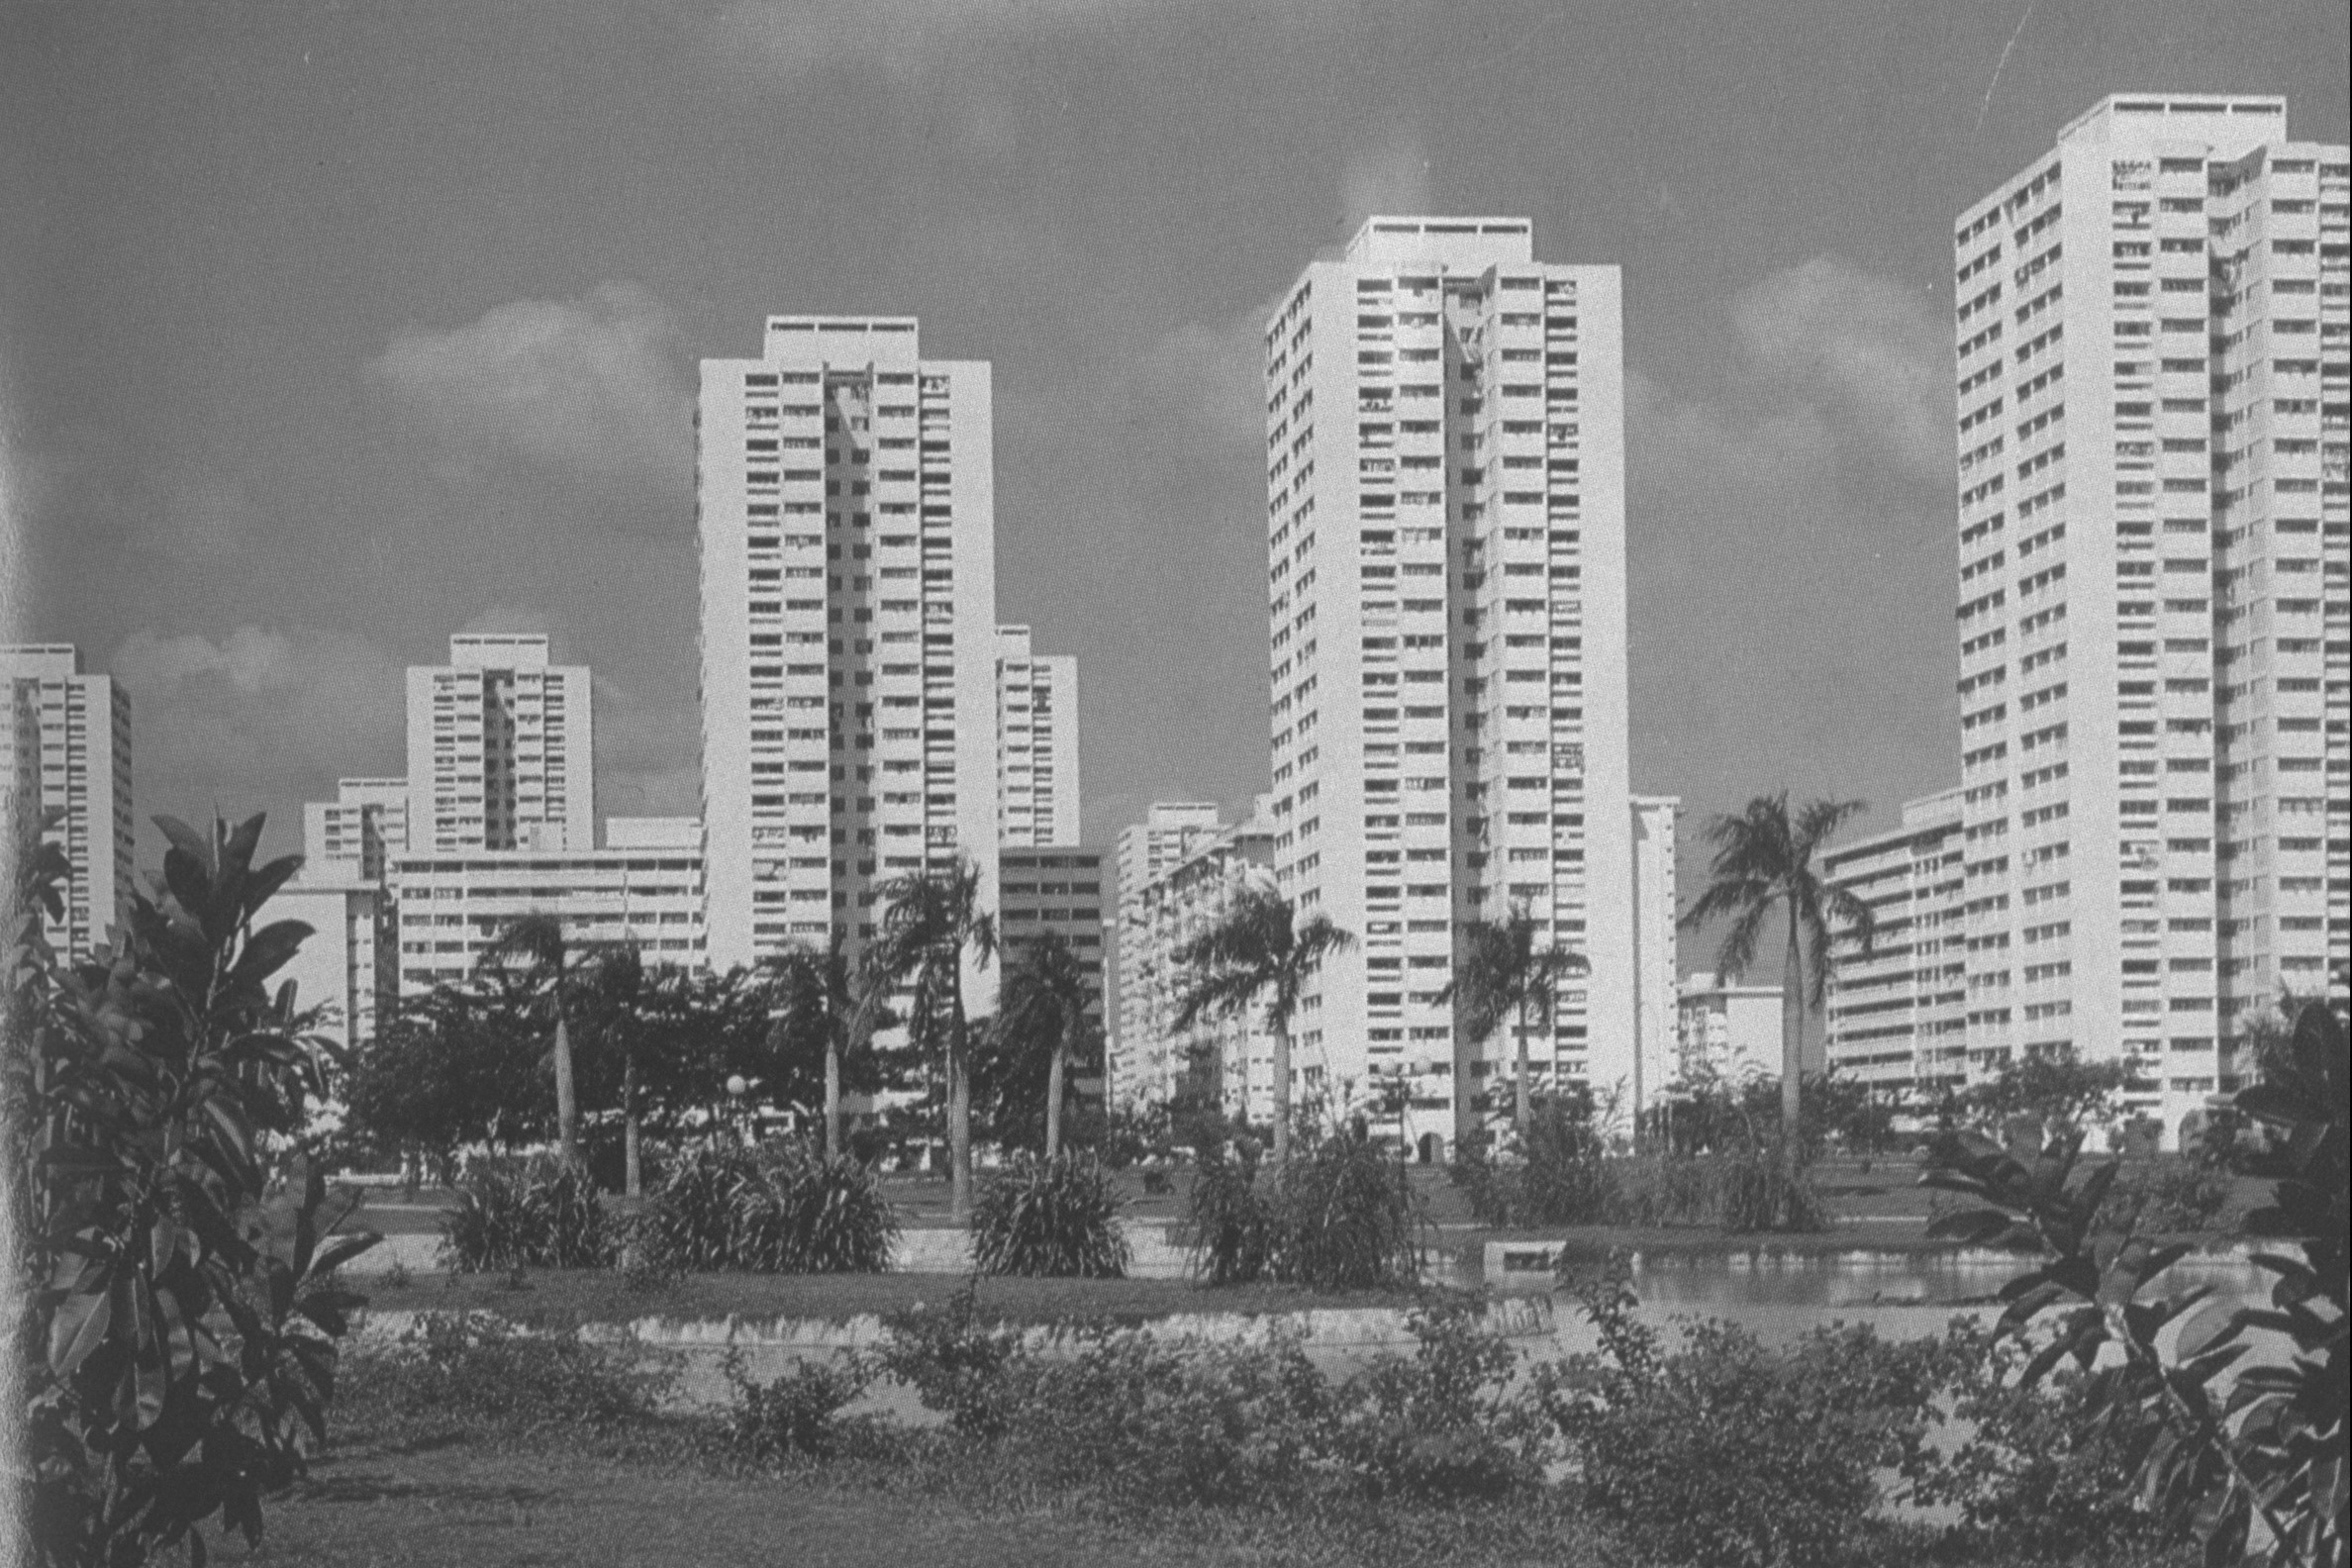 View of Housing and Development Board (HDB) flats at Marine Parade